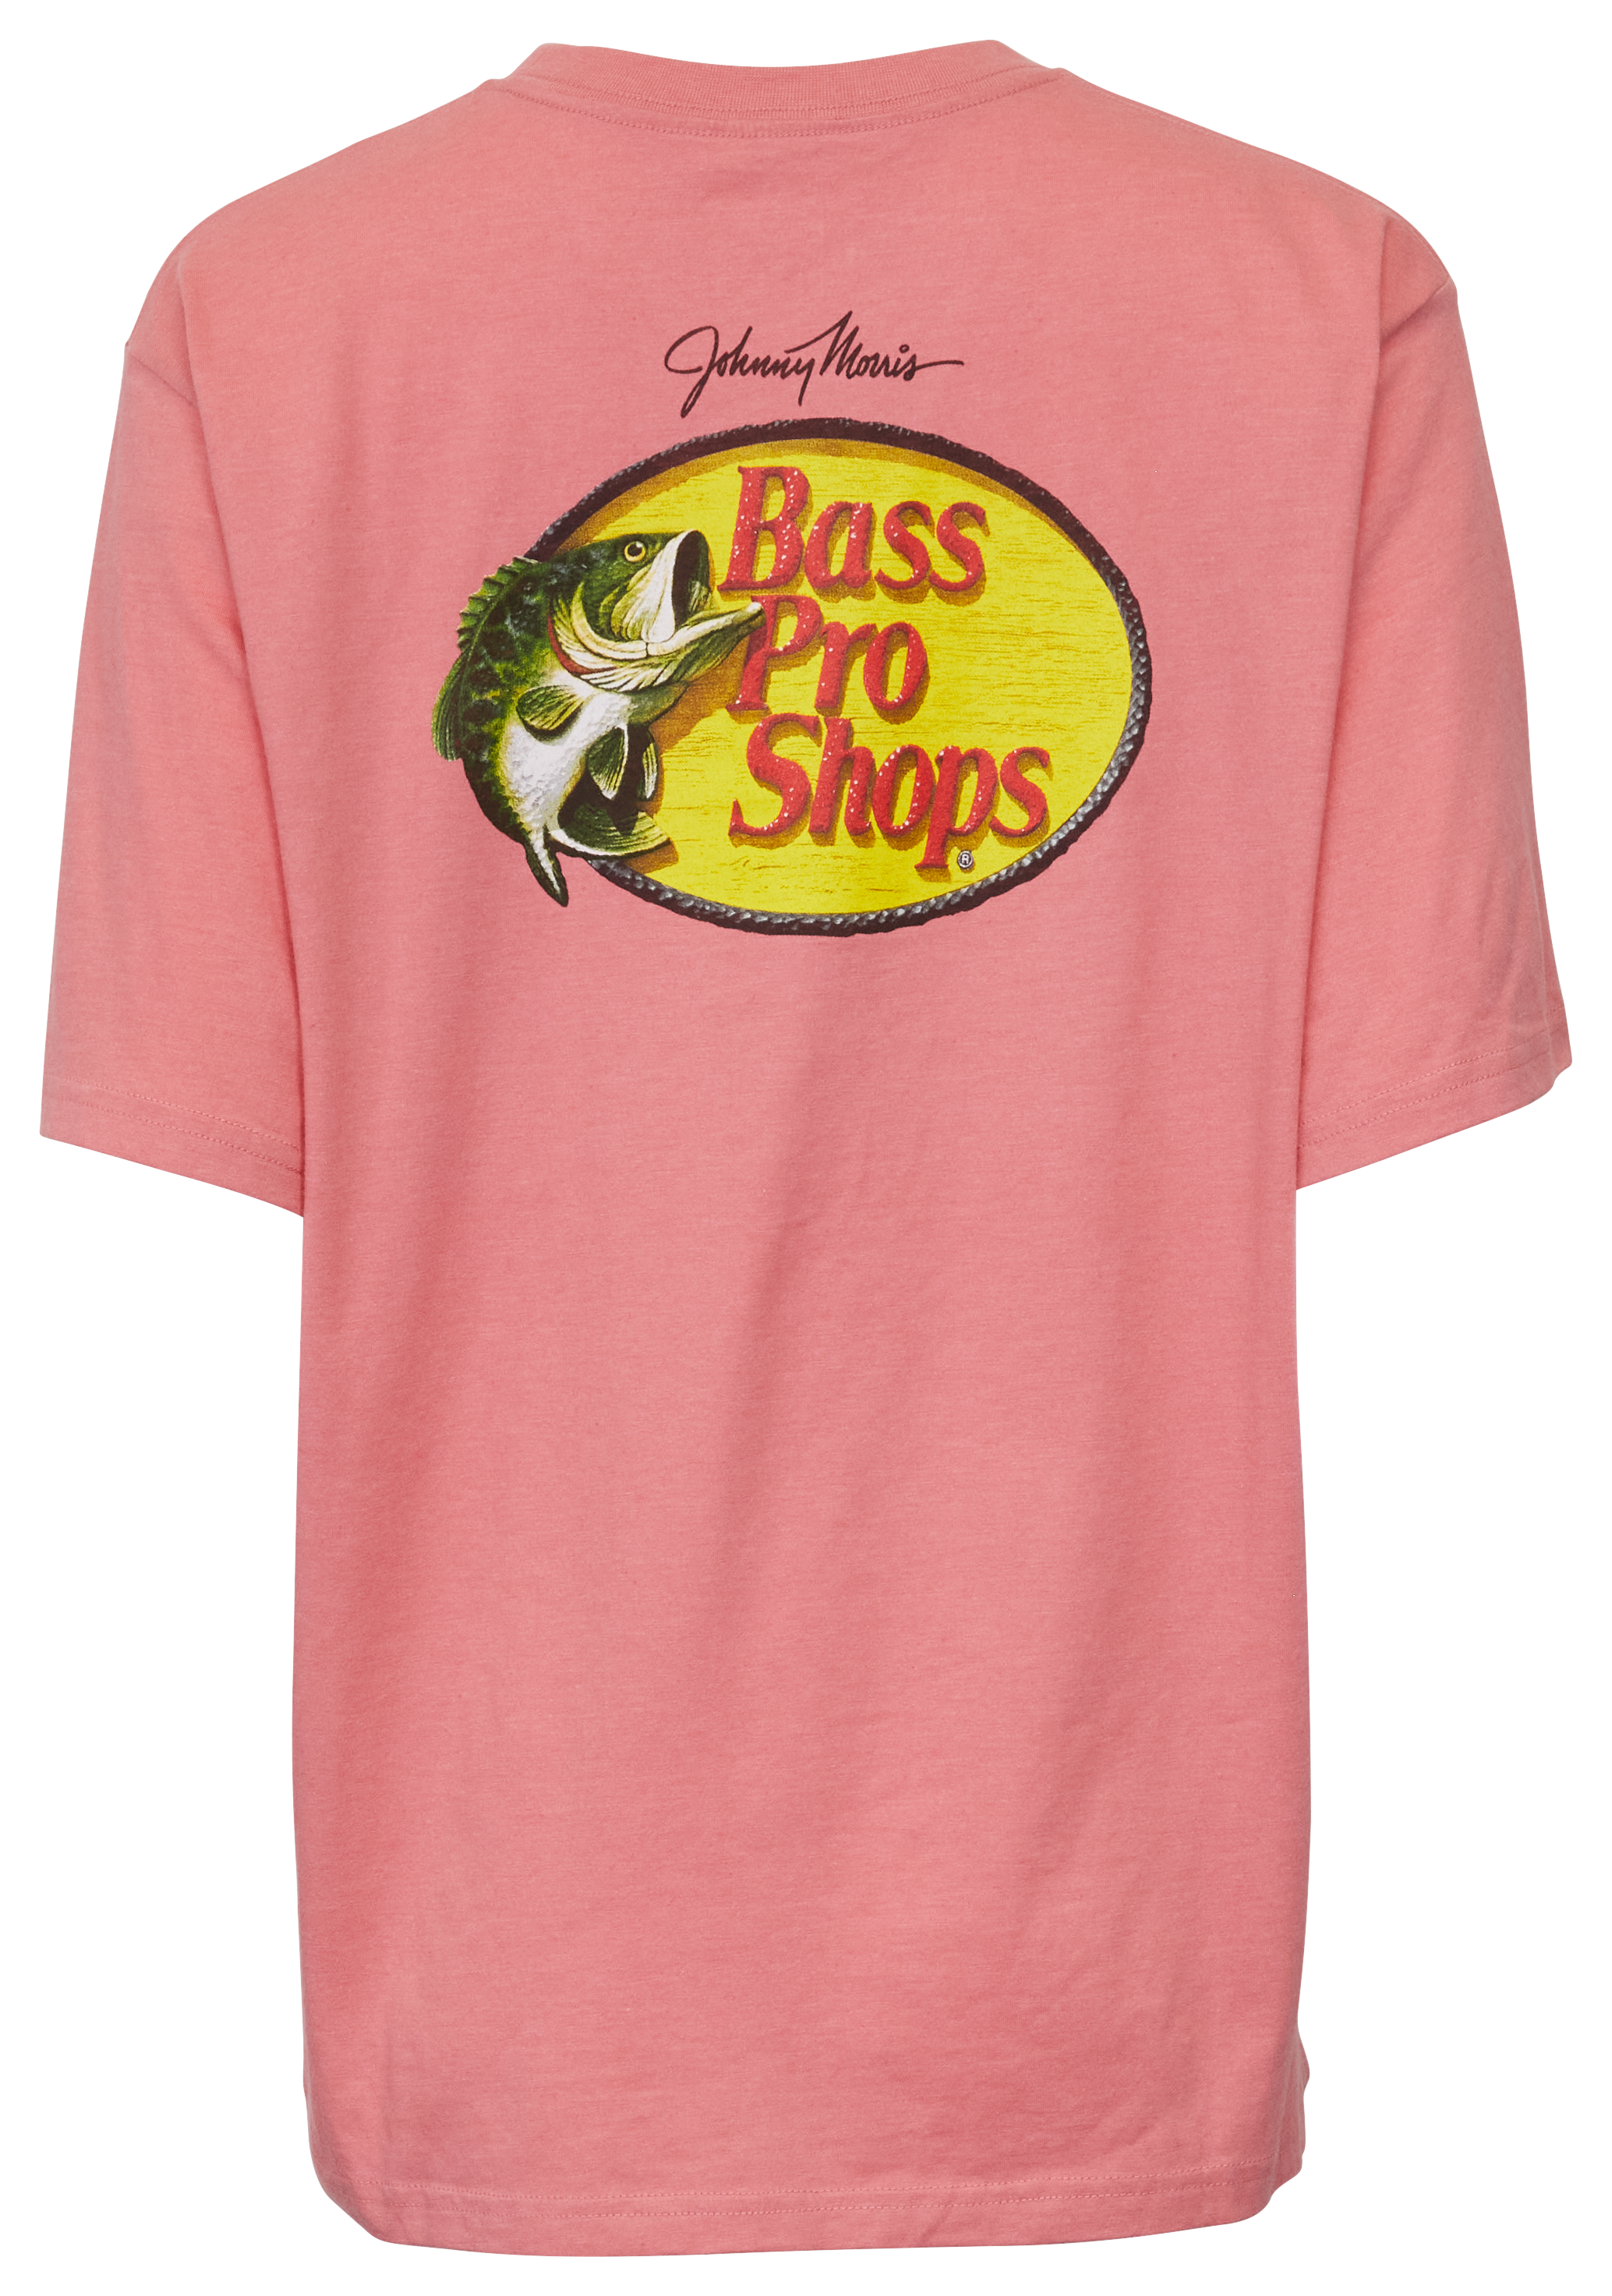 Bass Pro Shops Woodcut Logo Short-Sleeve Pocket T-Shirt - Papaya - S